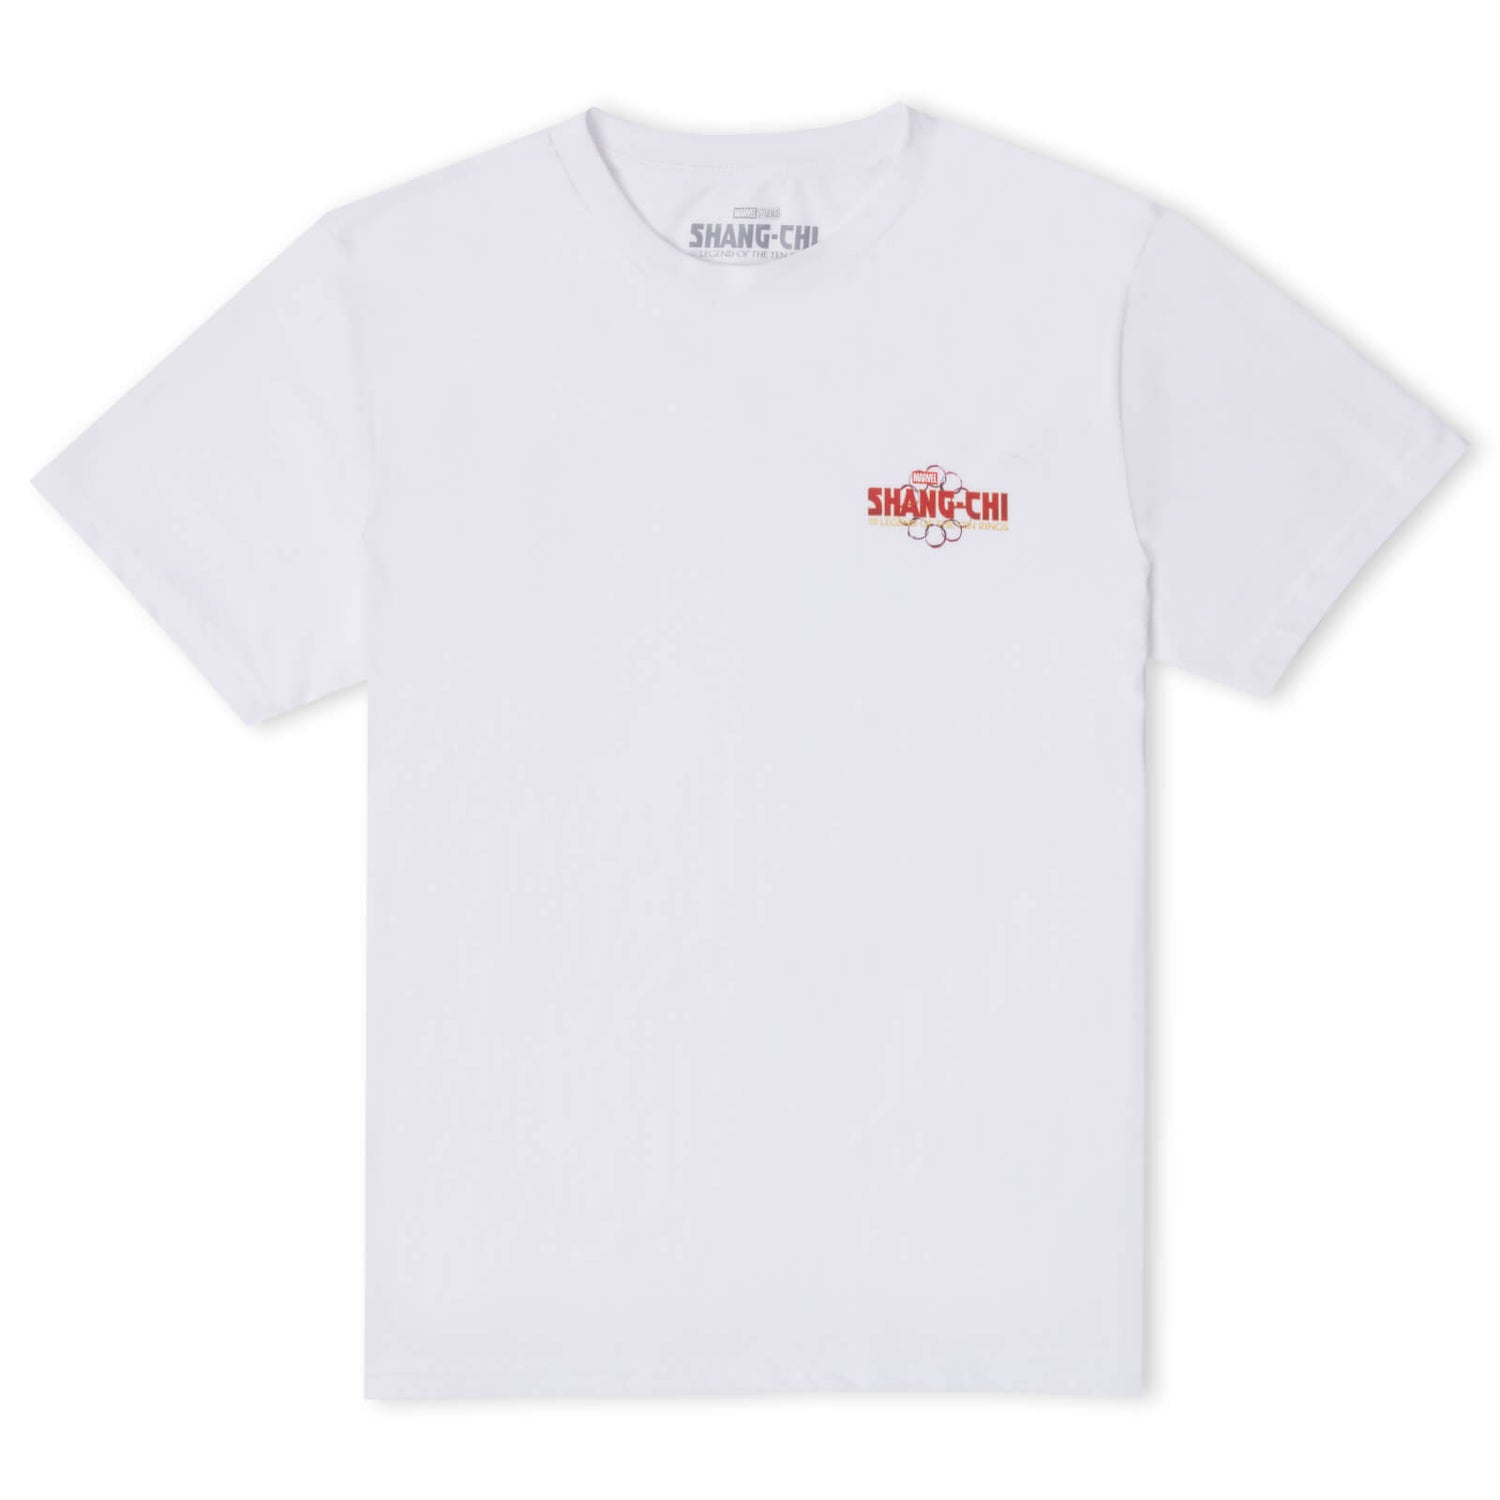 Camiseta Razorfist de Shang-Chi para hombre - Blanco